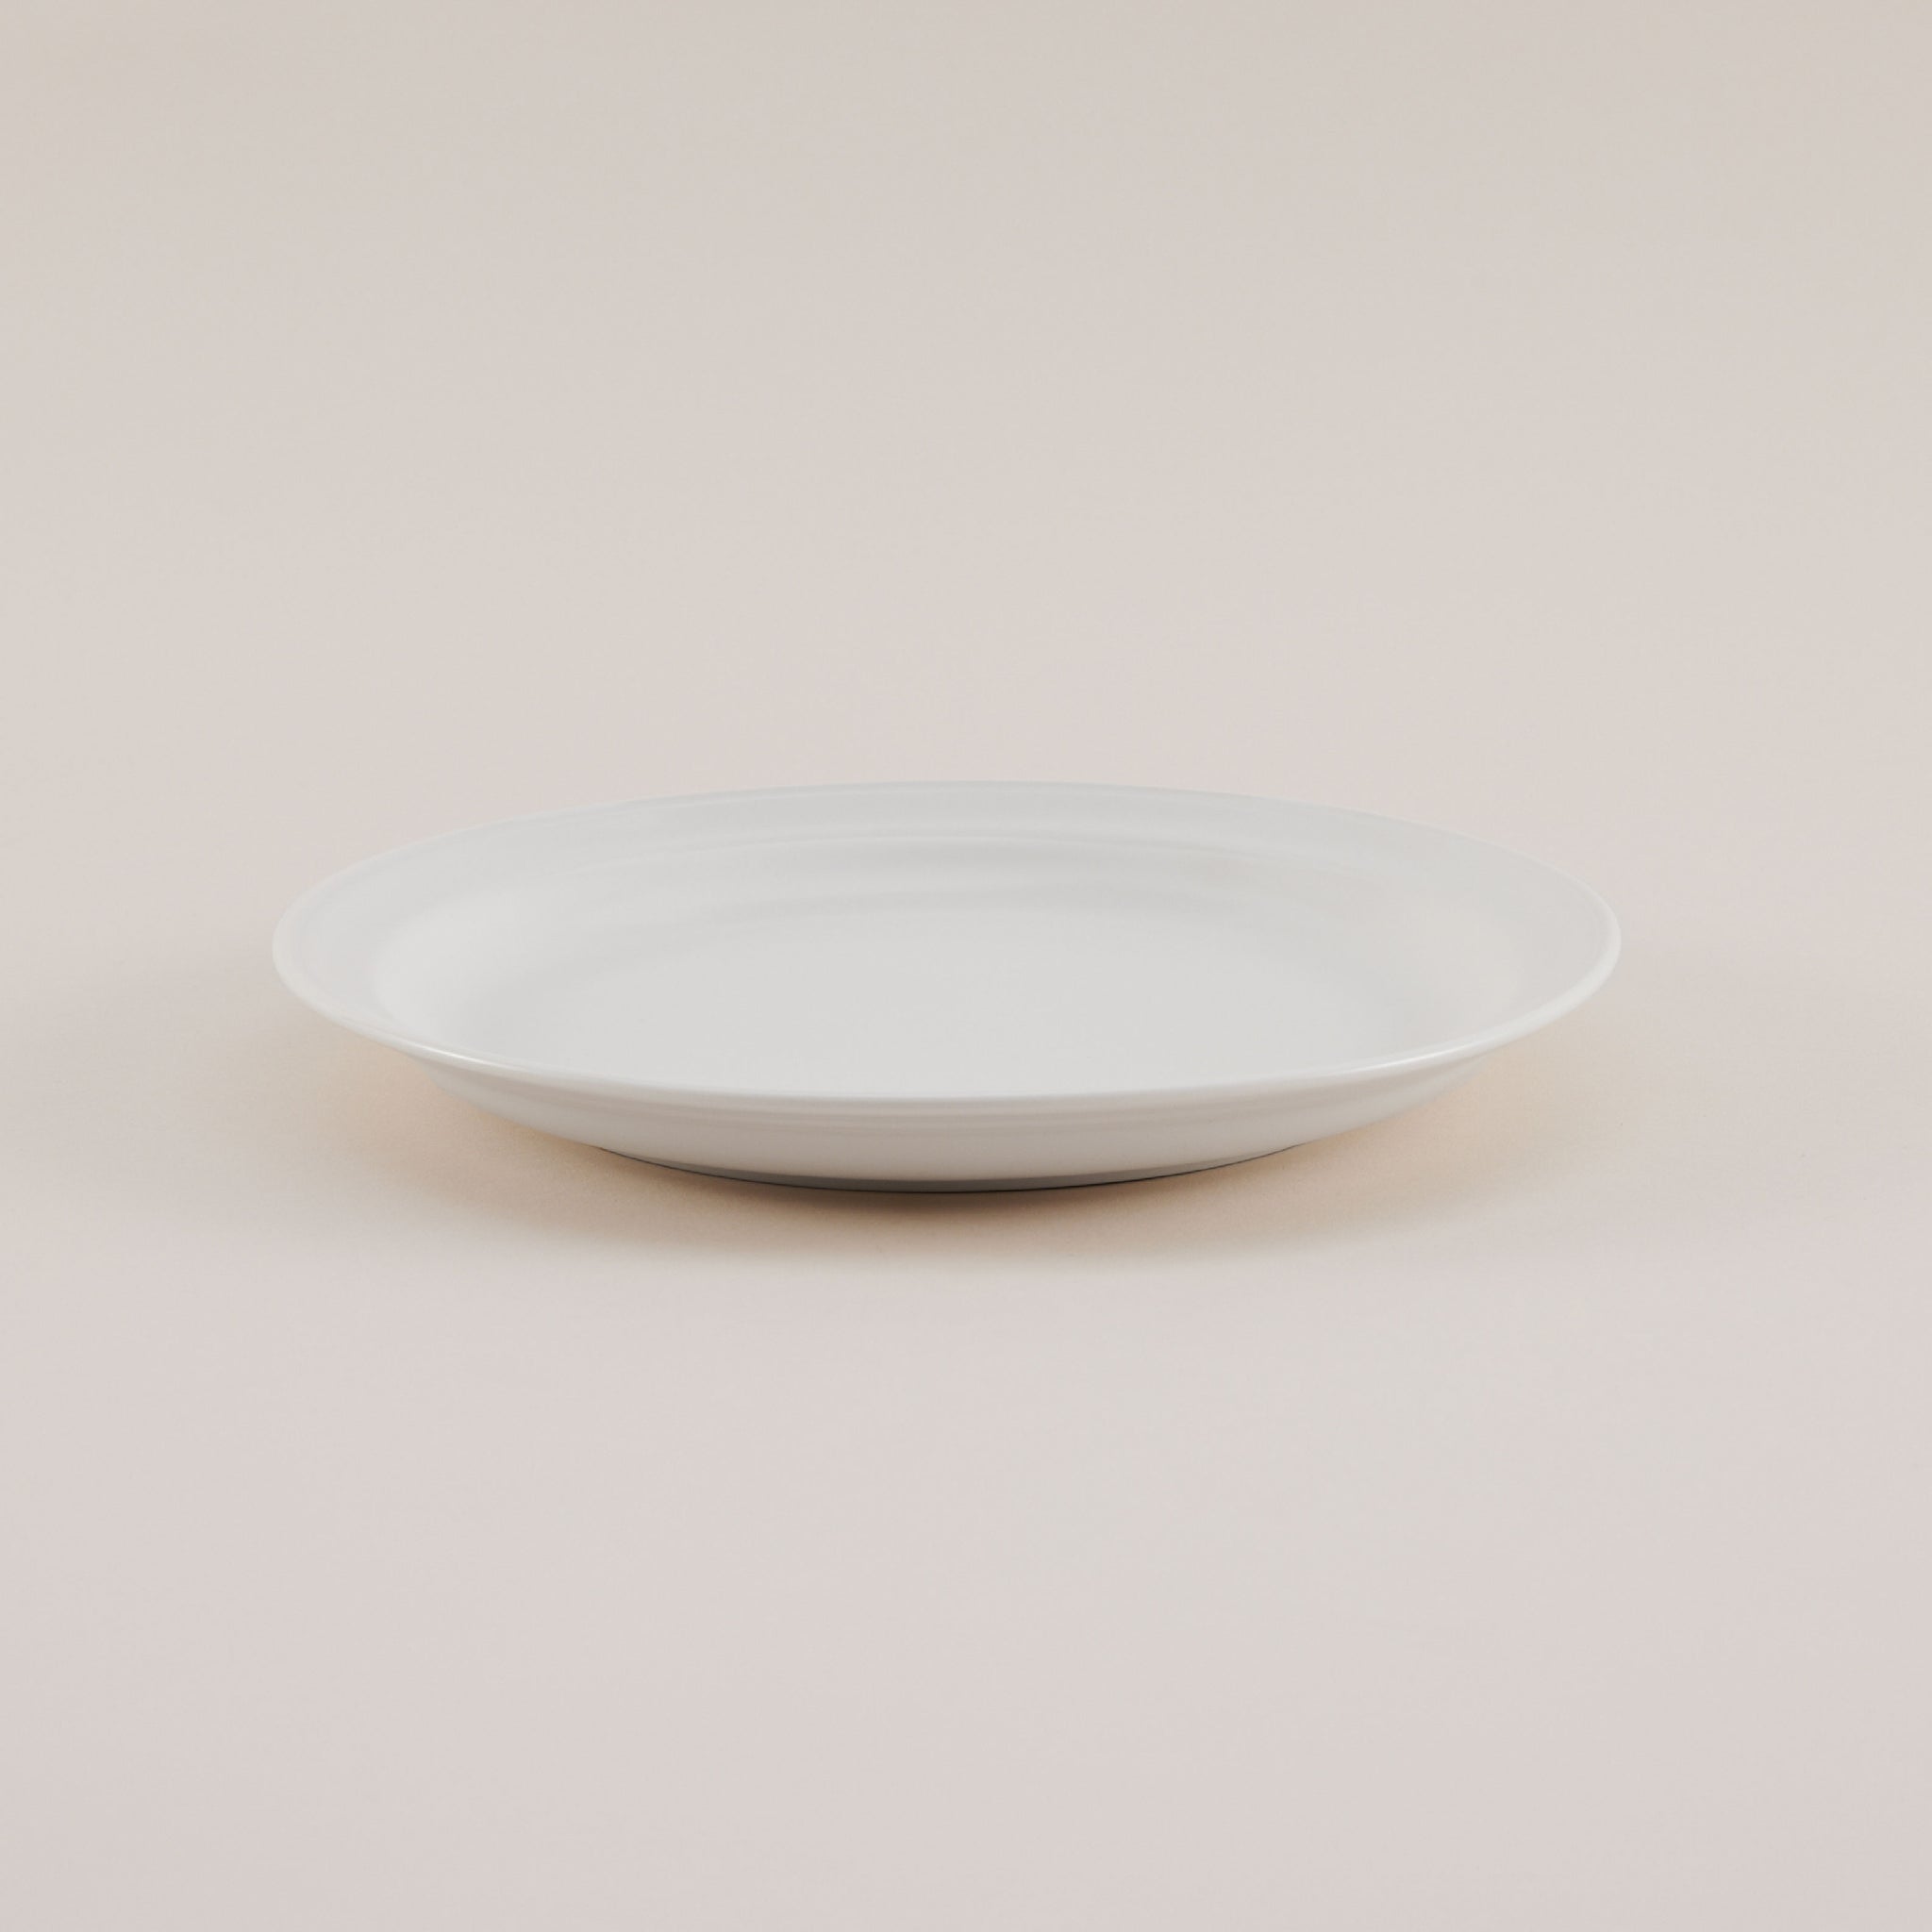 Bowlbowl Origin & Vintage Plate | จานเซรามิก